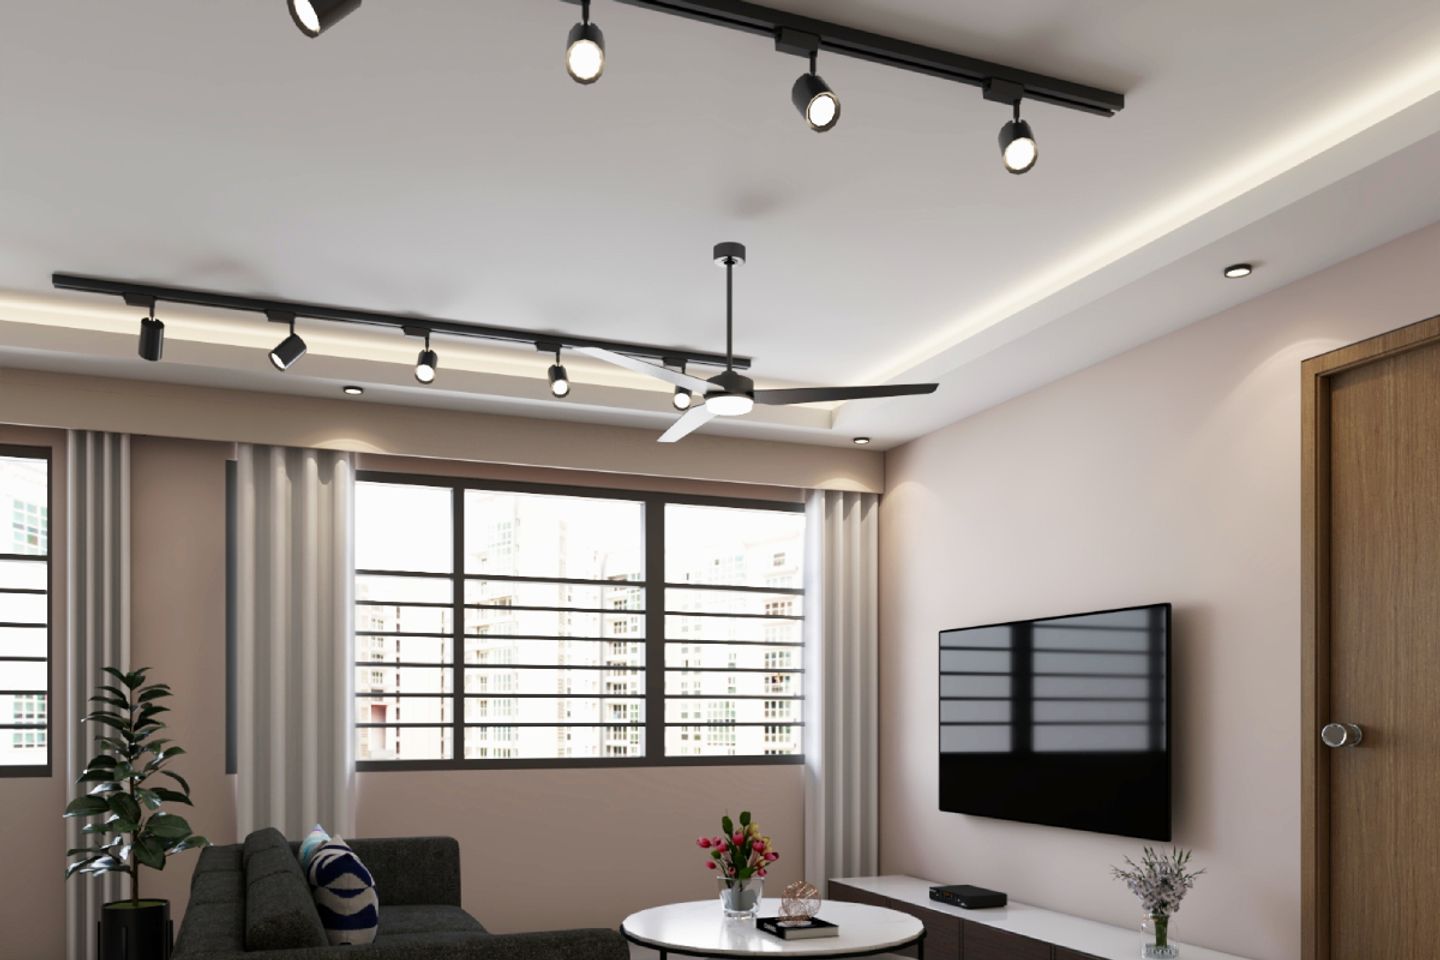 Rectangular False Ceiling Design With Recessed Spotlights - Livspace